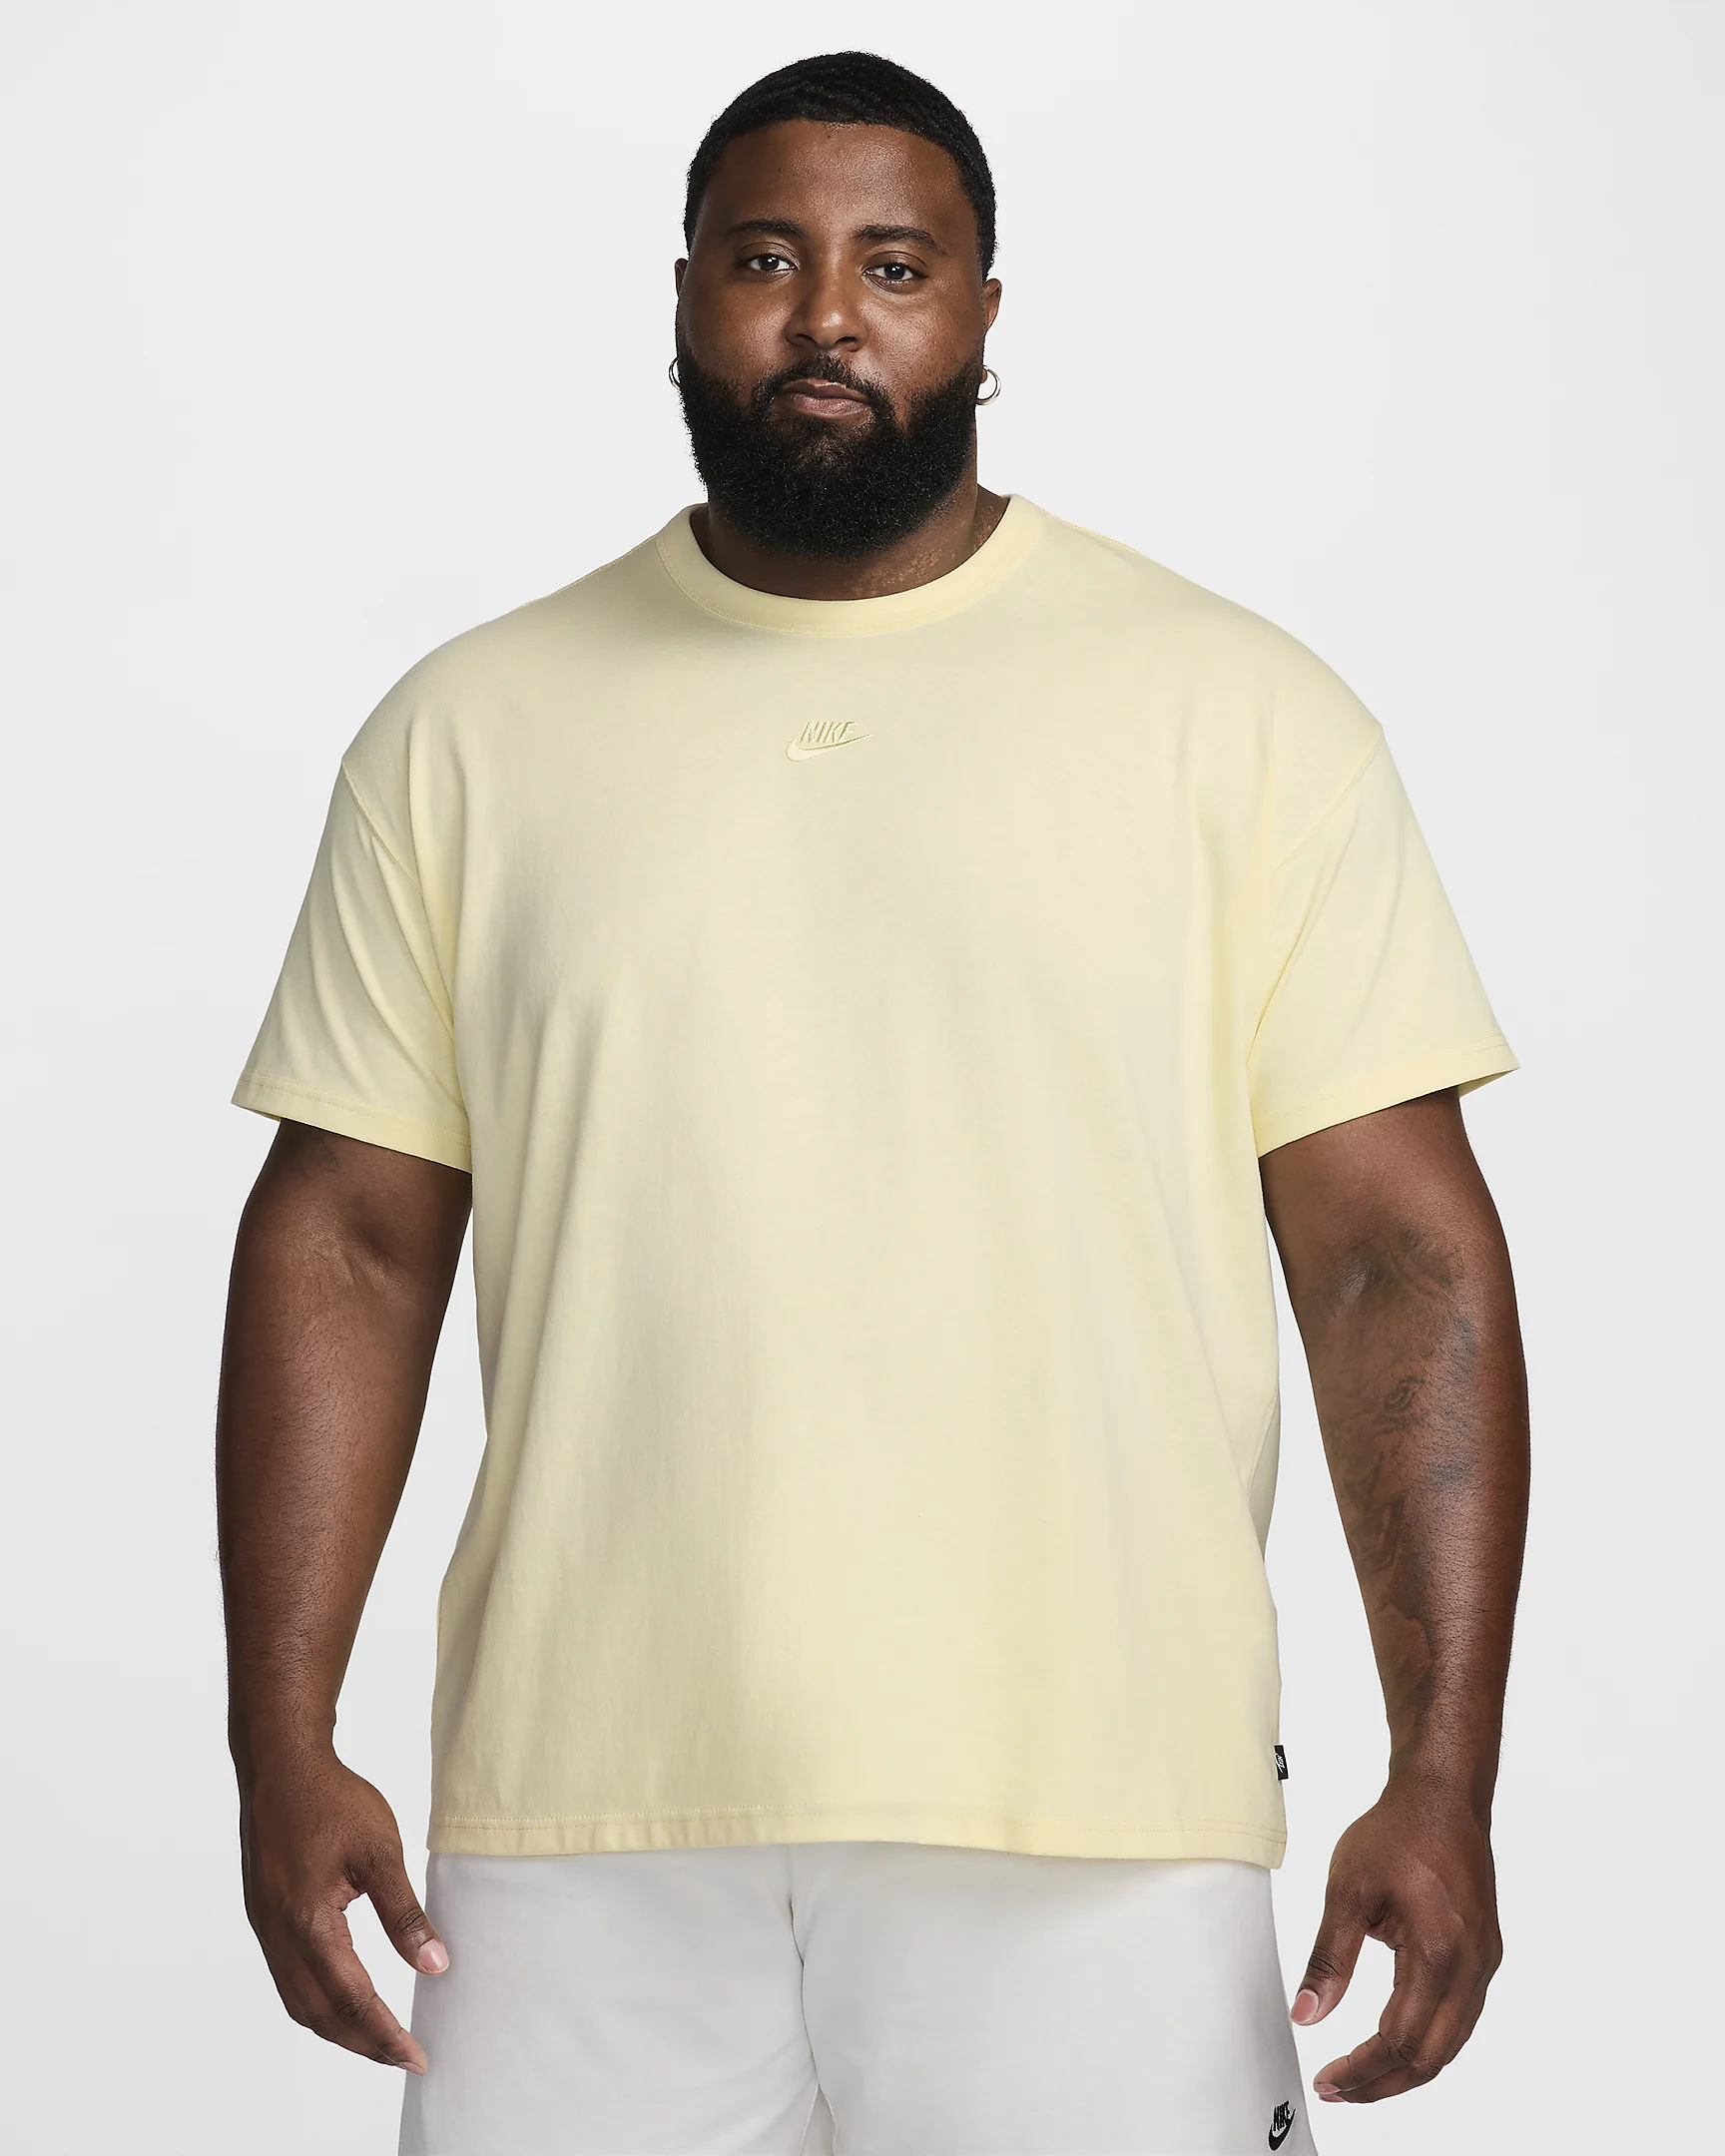 Nike Sportswear Premium Essentials Men's T-Shirt